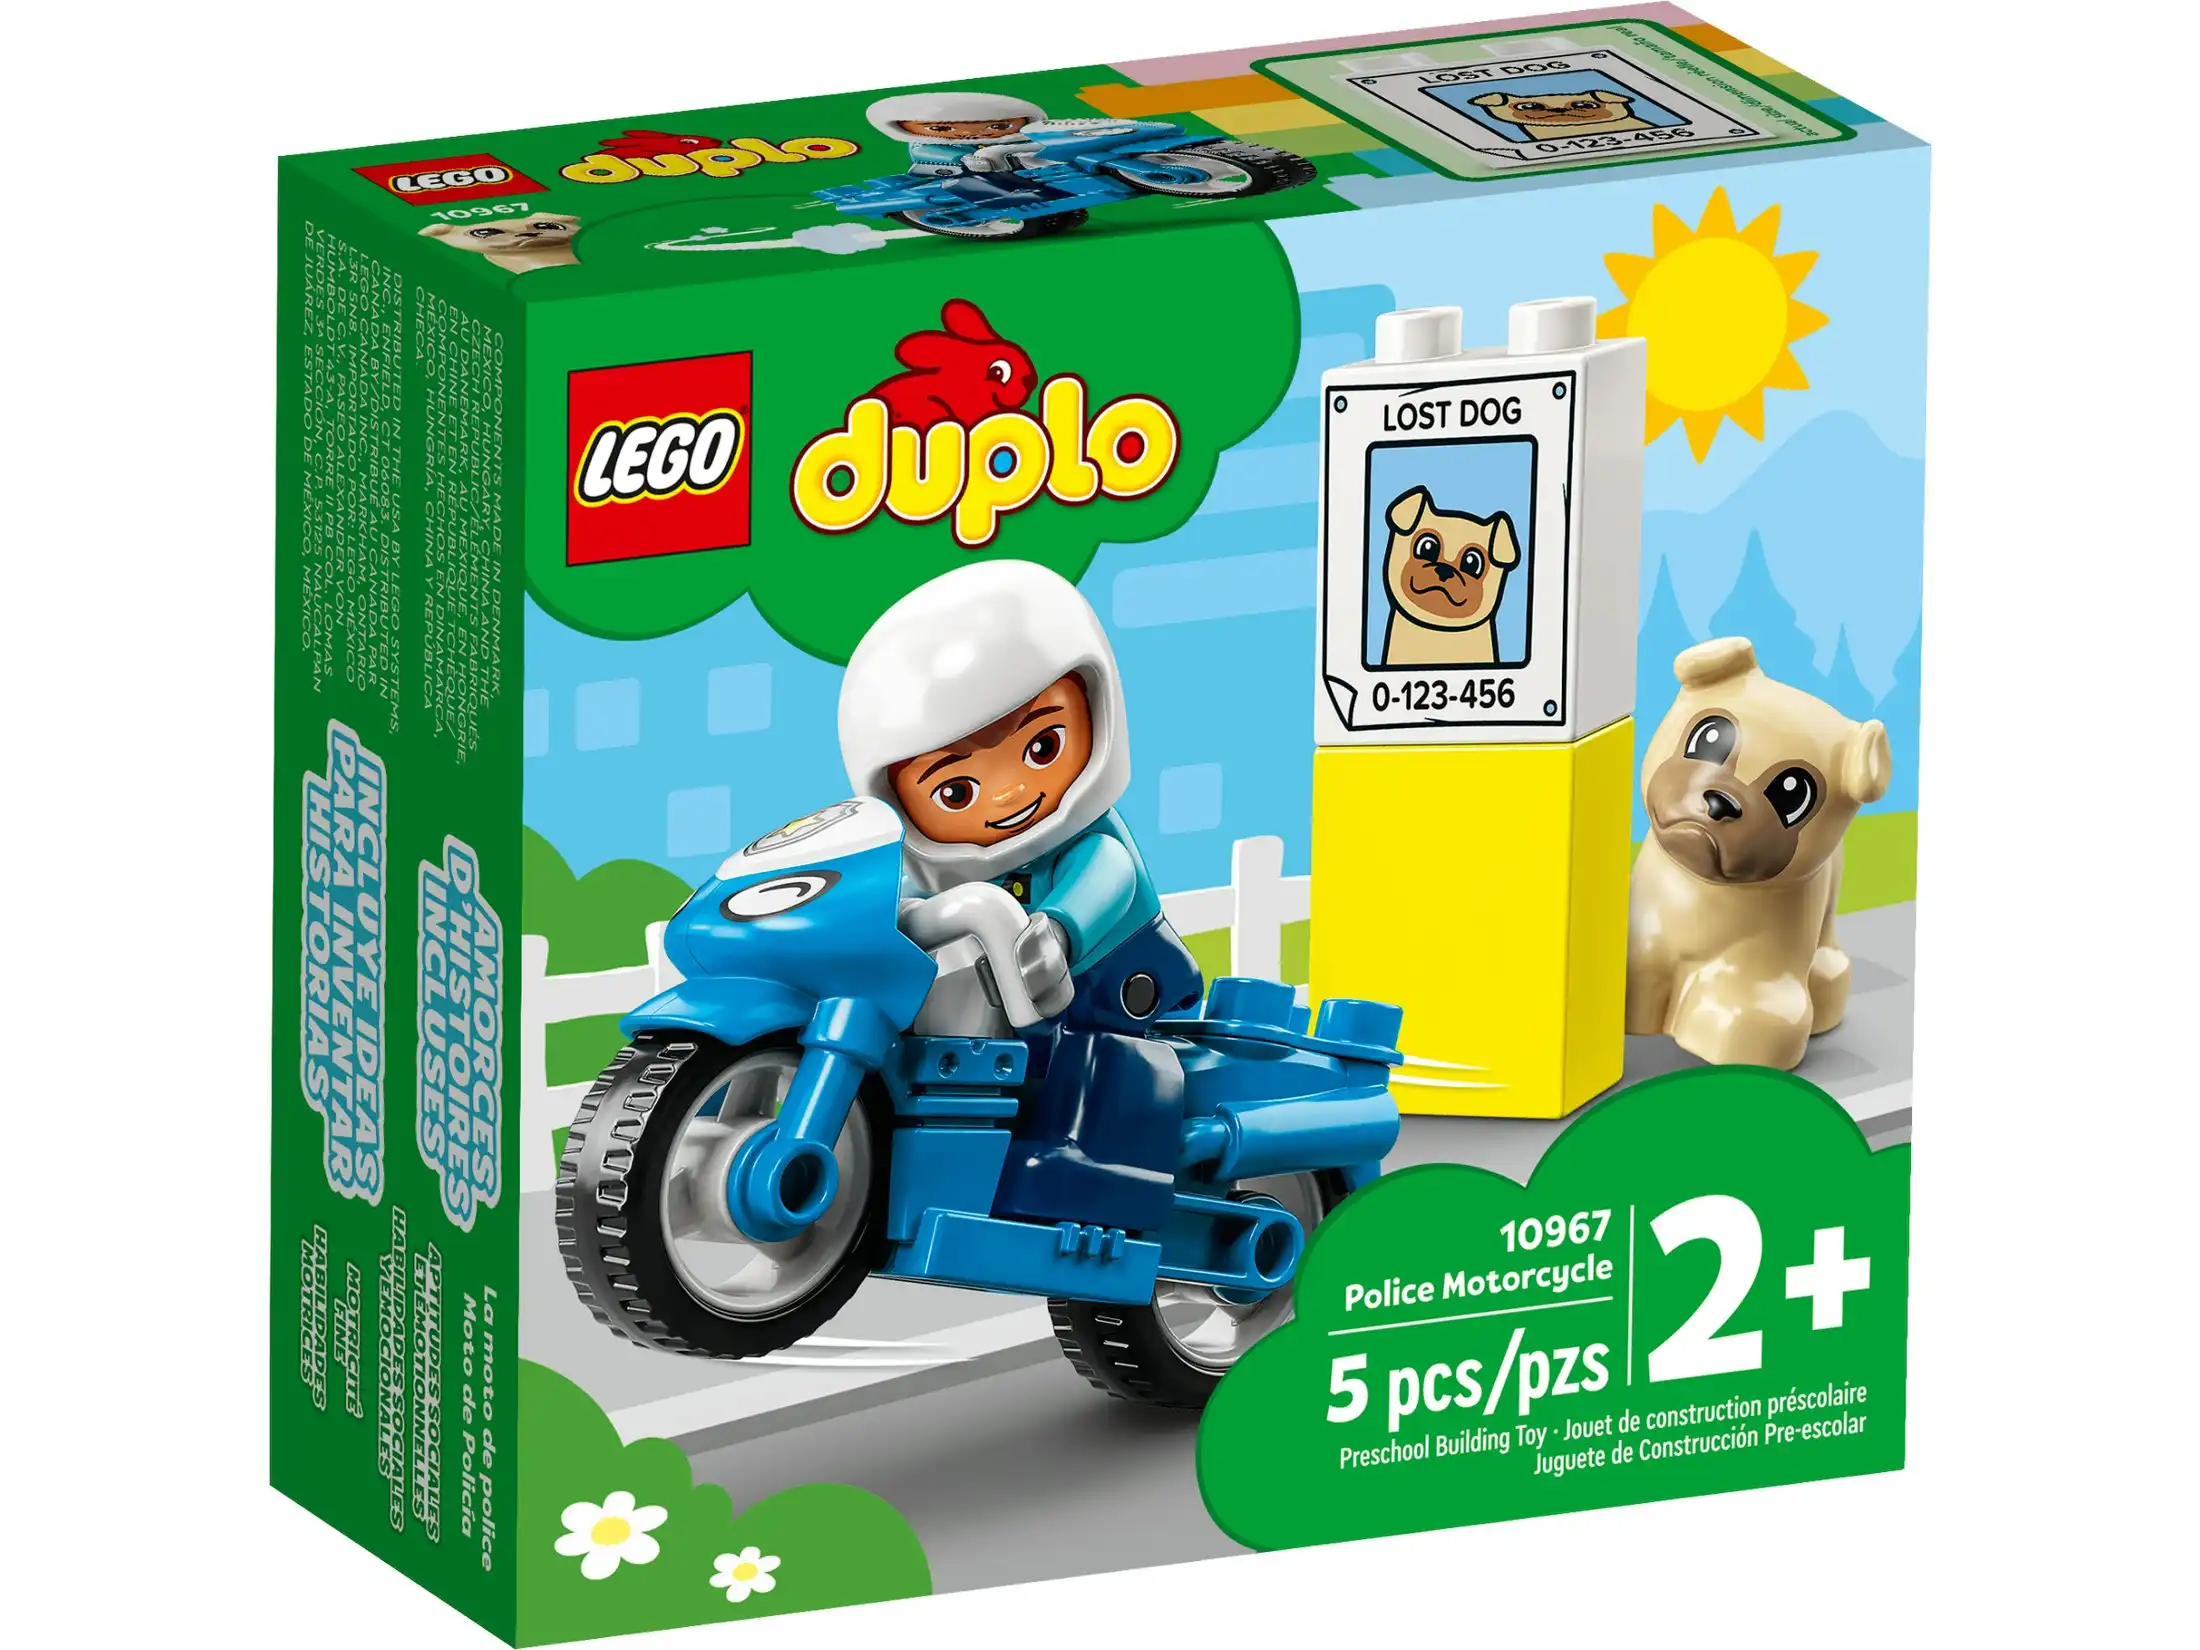 LEGO 10967 Police Motorcycle - DUPLO